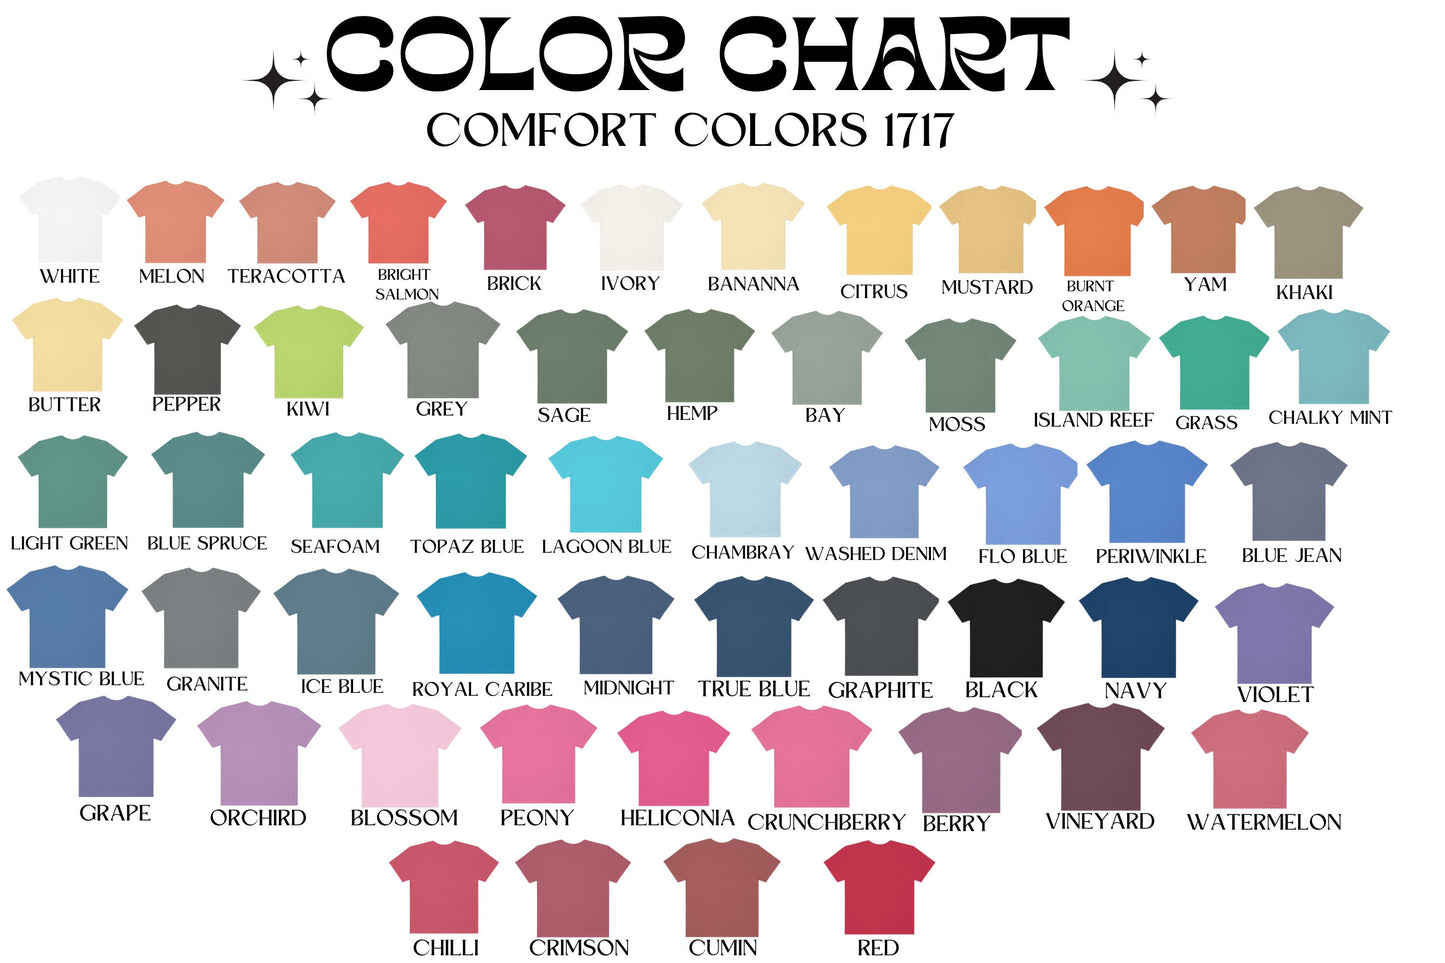 Bonnie Bennett Shirt, TVD shirt, Bonnie Bennett,TVD merch, Tvd gift, Tvd fan, Comfort Colors, Mystic Falls